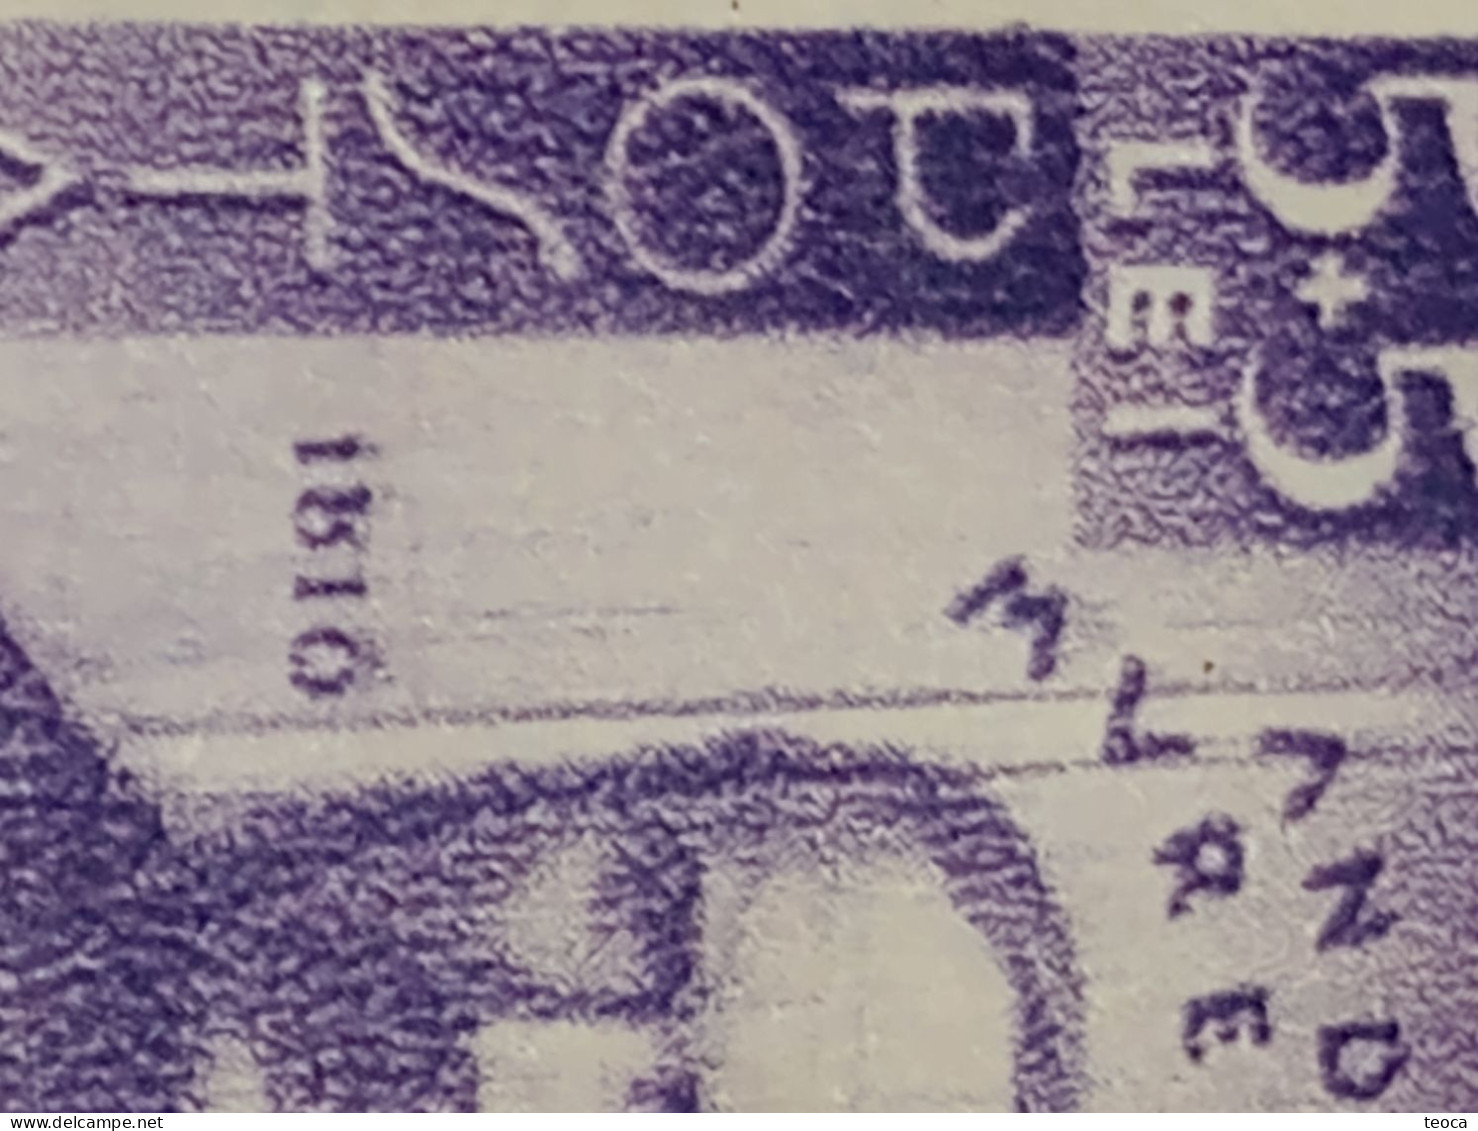 Stamps Errors Romania 1942 # Mi 755 Printed With Double Vertical Lines And Horizontal Line, Letter "p" Broken, See Image - Variétés Et Curiosités